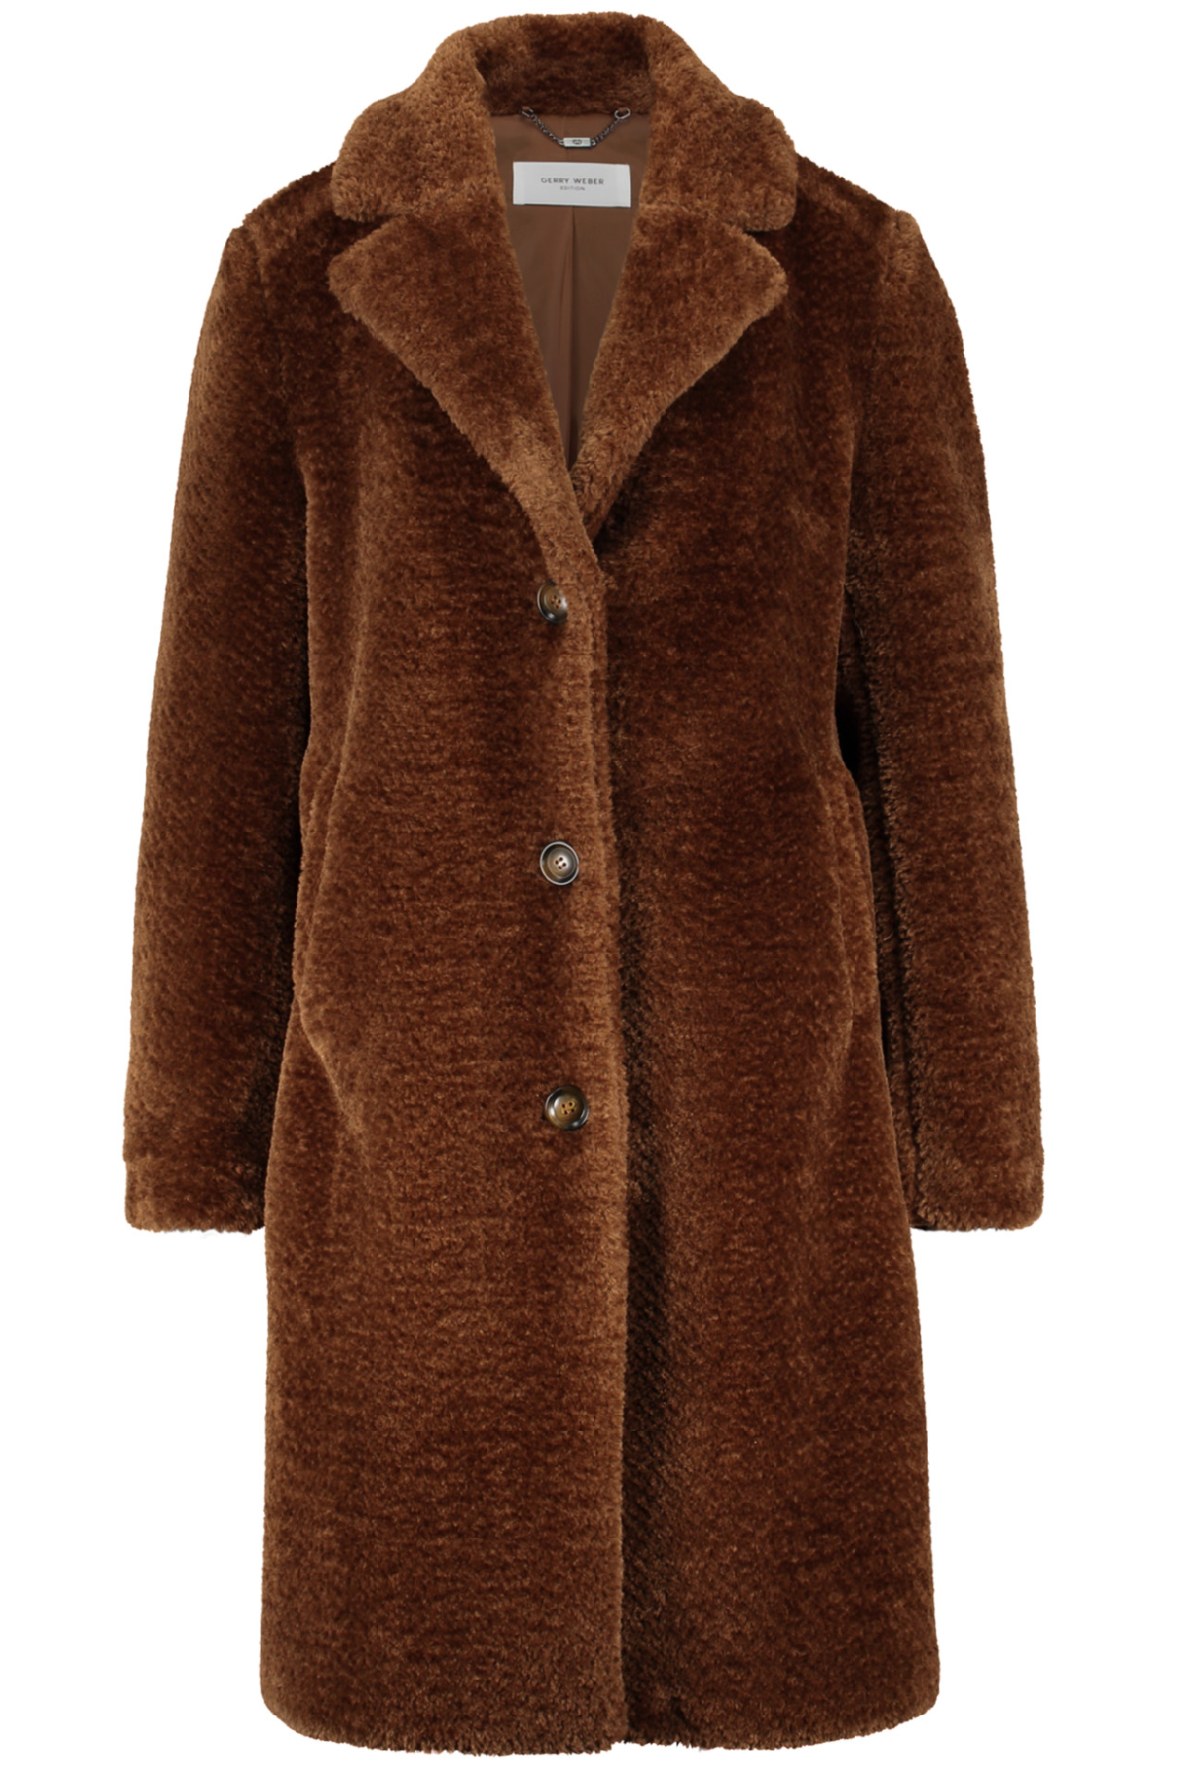 edition frakke i brun til damer - Hos Lohse